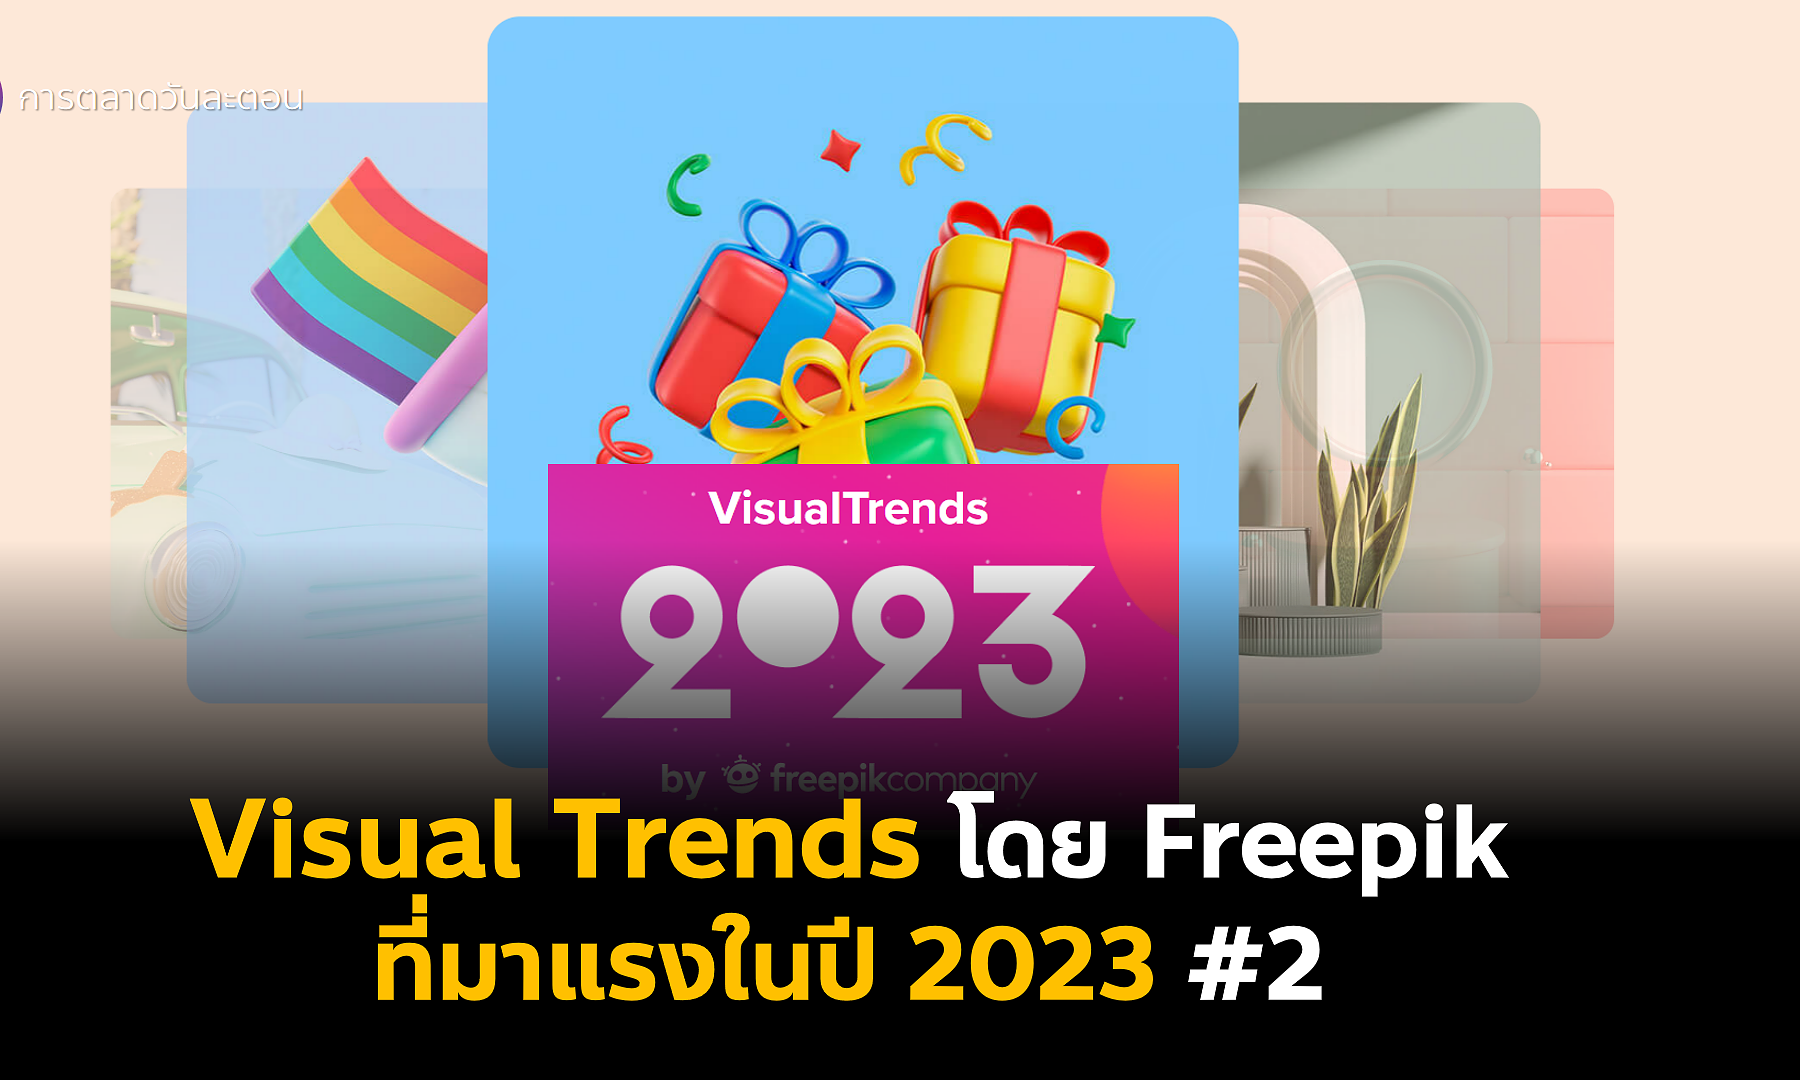 Visual Trends โดย Freepik ที่มาแรงในปี 2023 #2